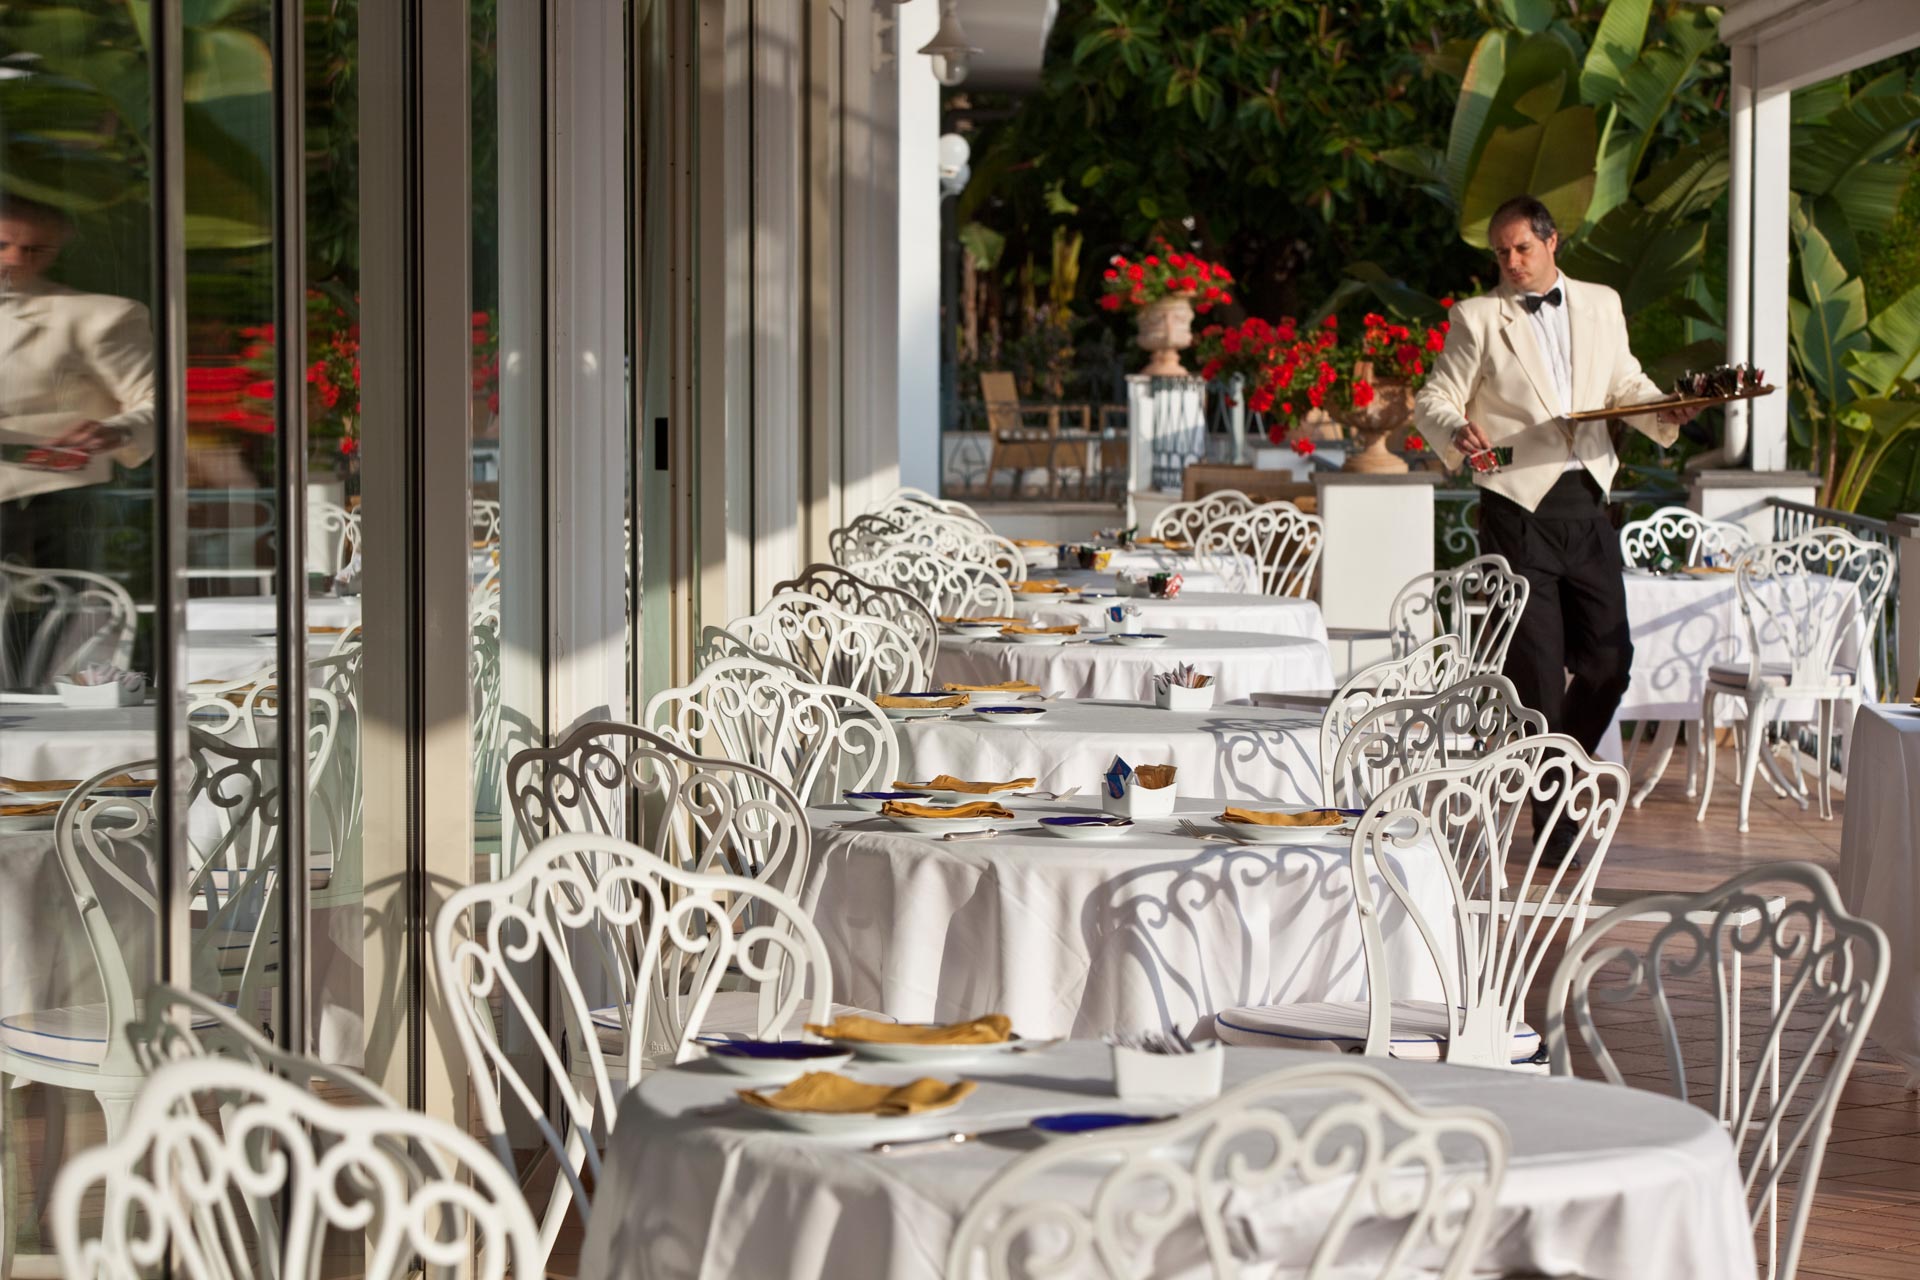 Restaurant Terrace